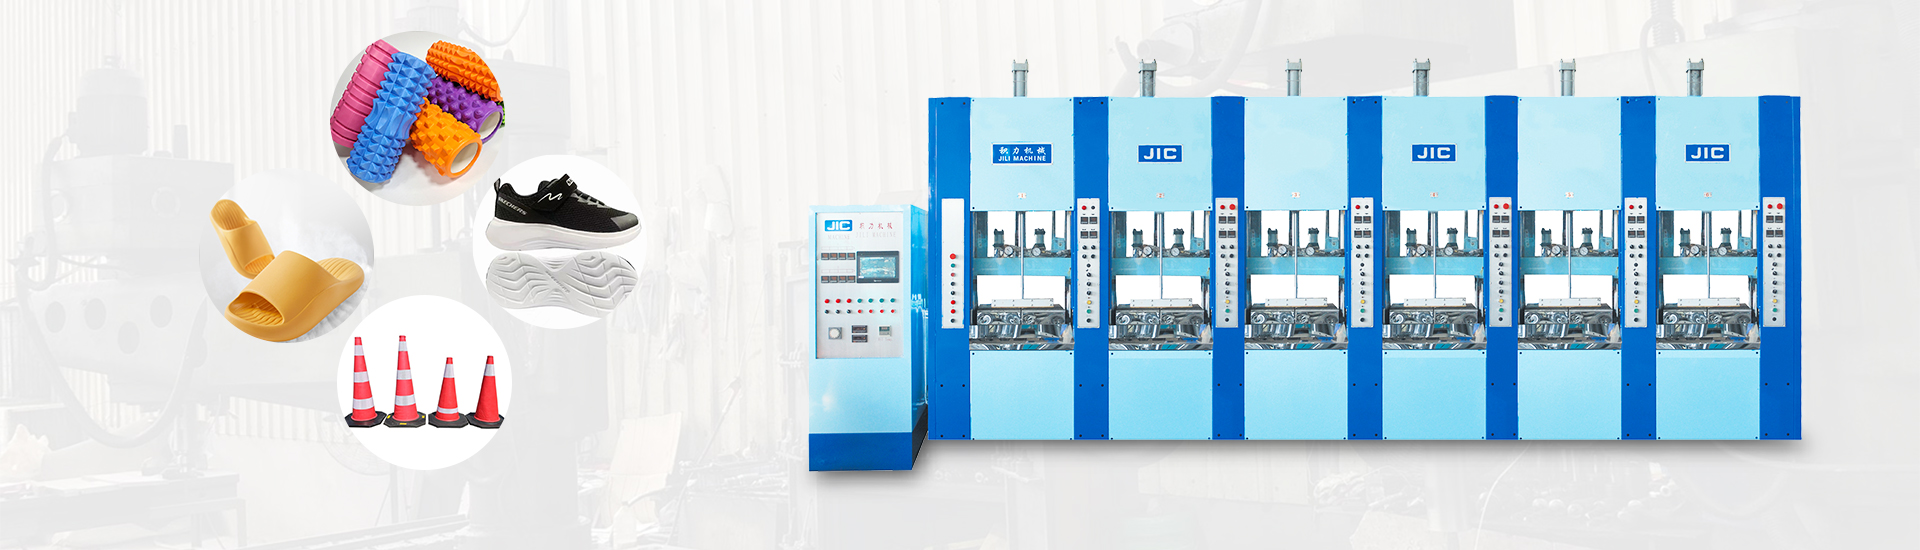 Jinjiang Jili Machine Co., Ltd. (JIC MACHINE)